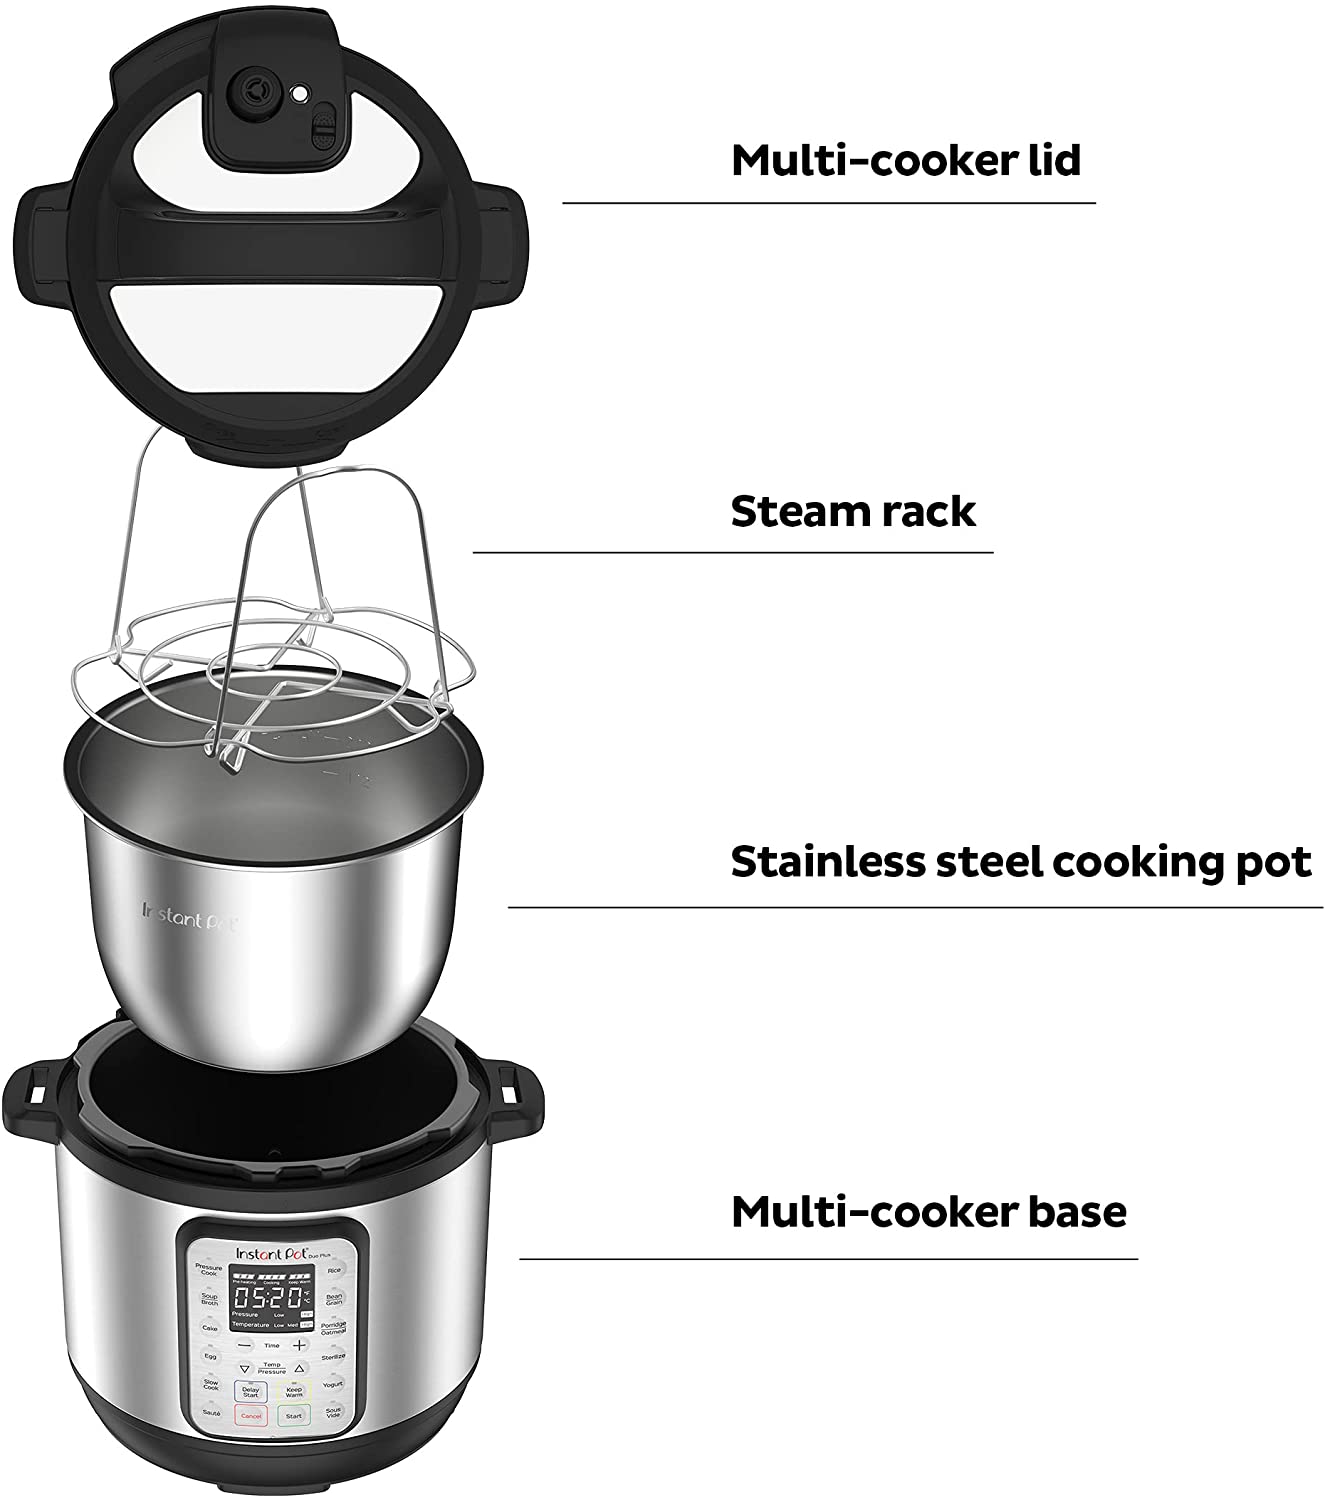 Instant Pot Duo Plus Mini 9-in-1 Electric Pressure Cooker